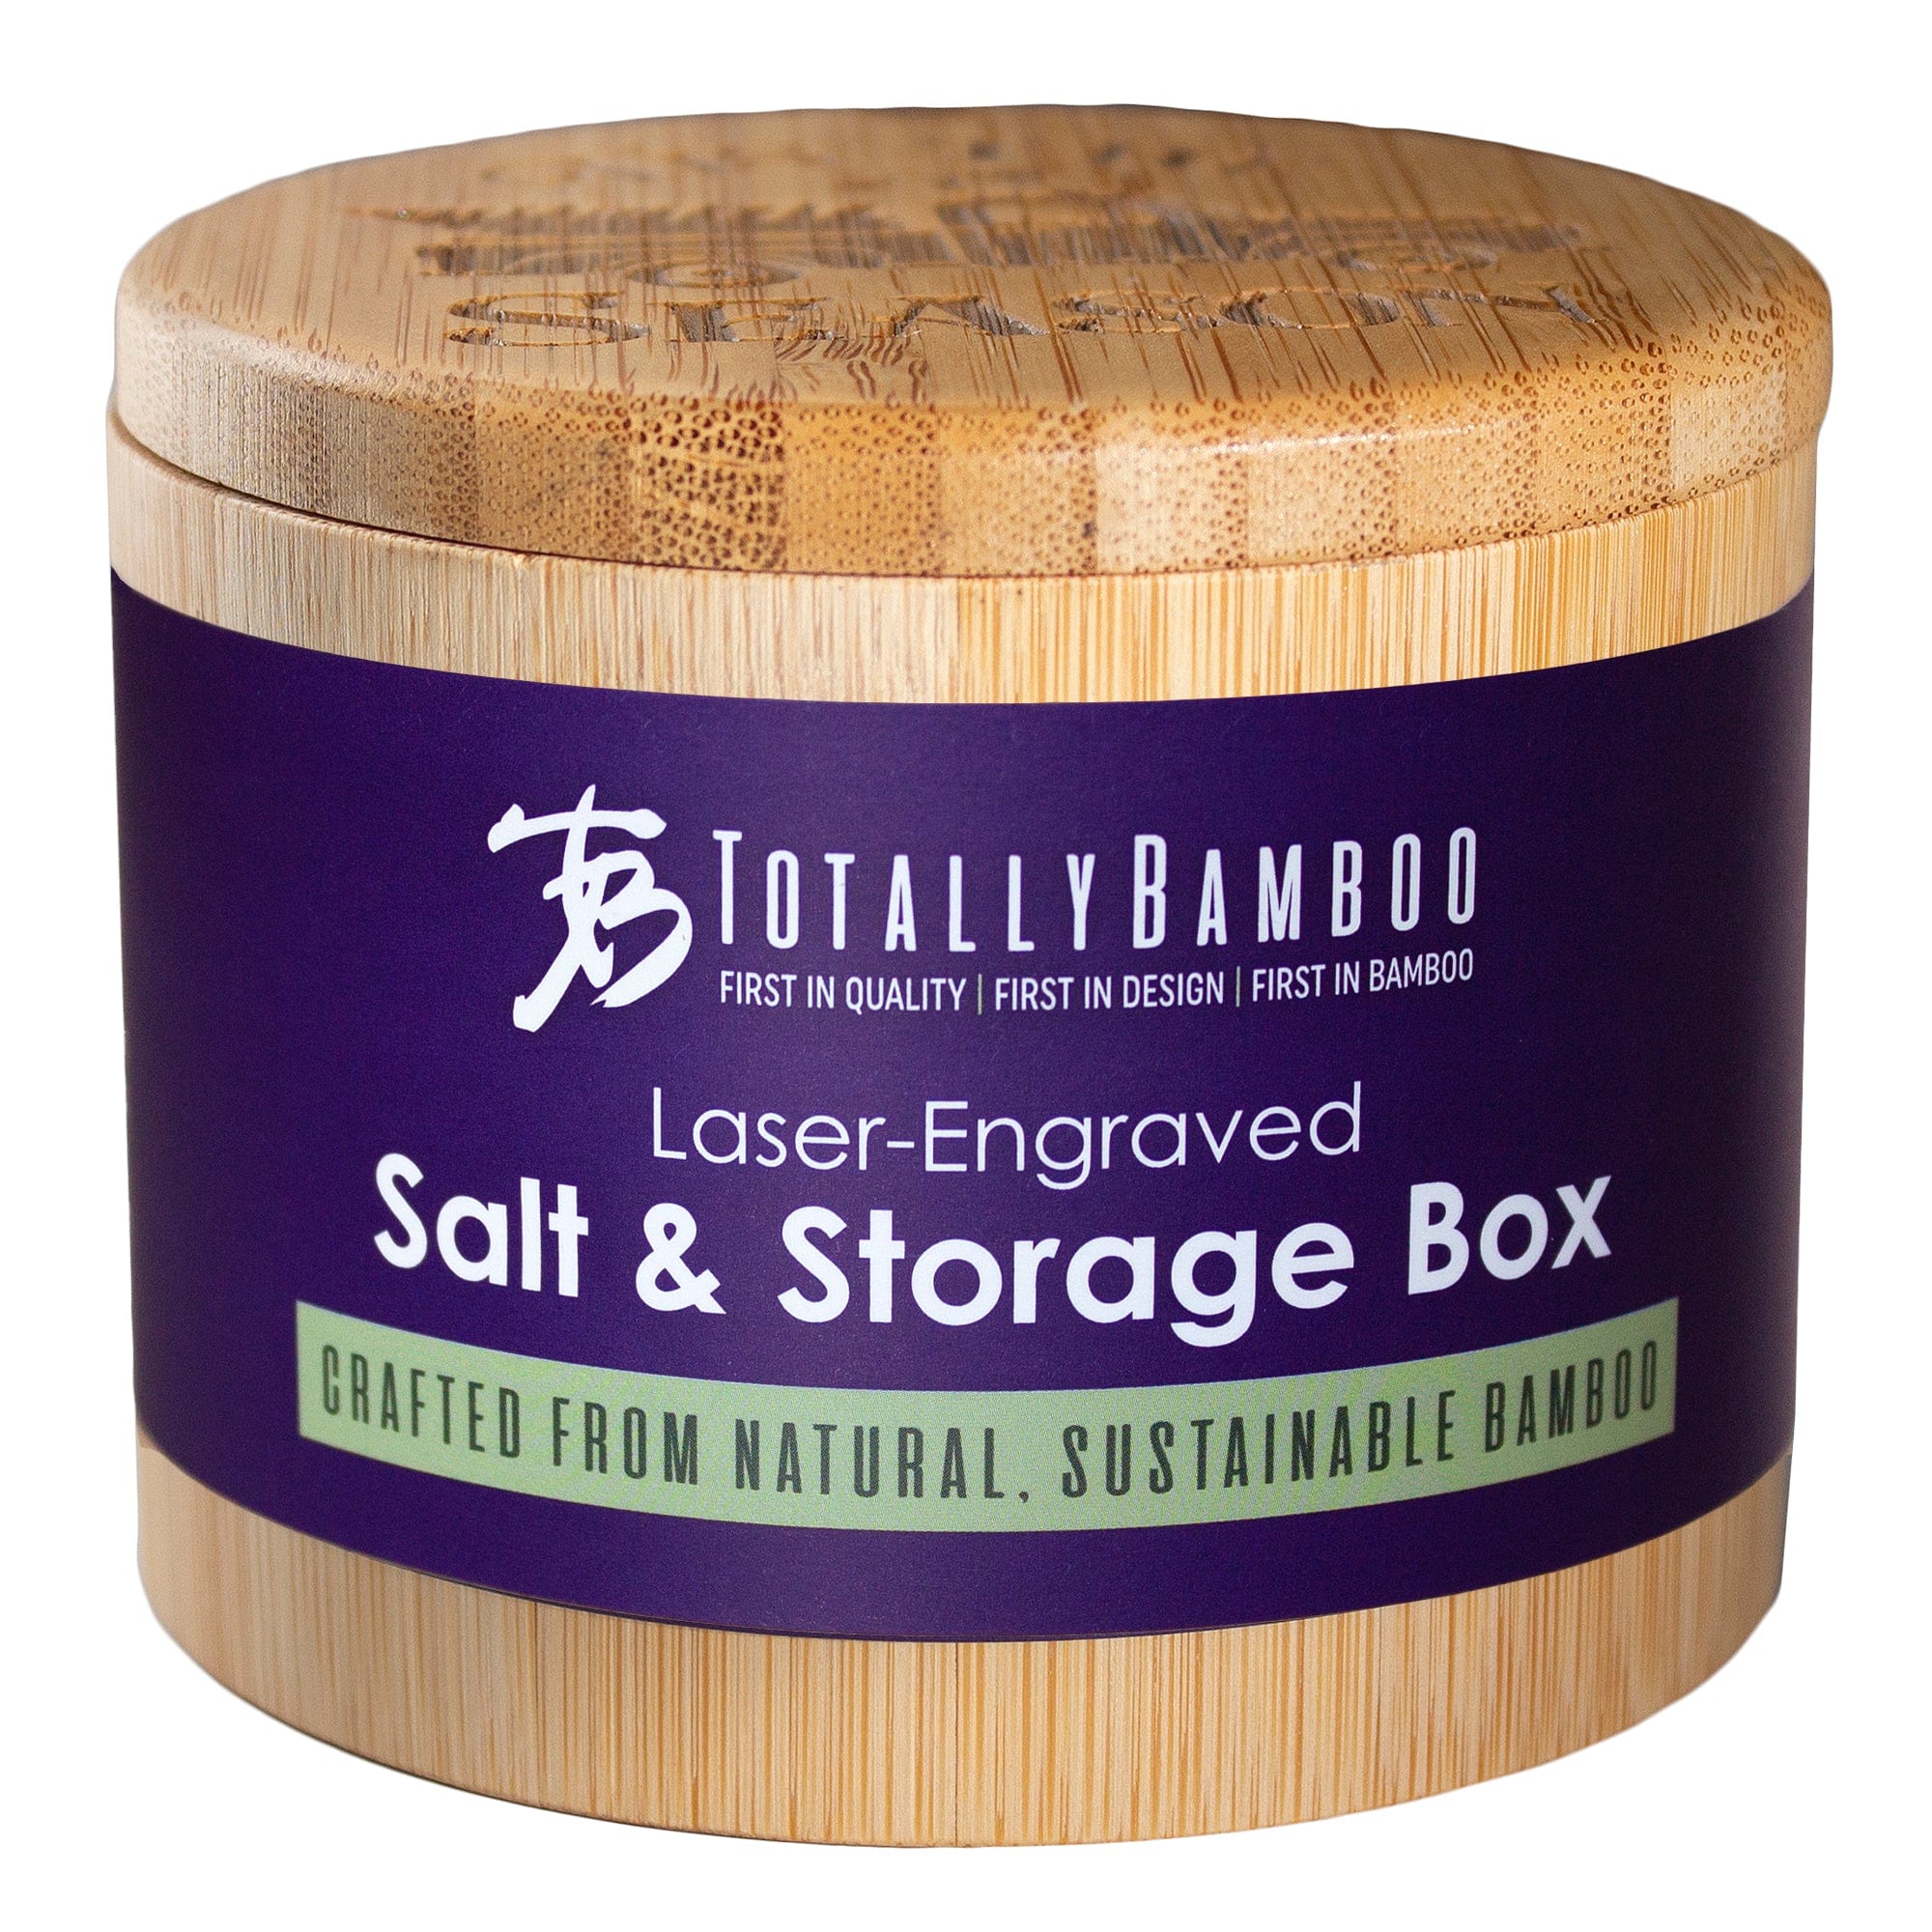 Totally Bamboo "Tis the Season" Christmas Salt Box: Magnetic Swivel Lid, Engraved Holiday Artwork, 6-Oz. Capacity